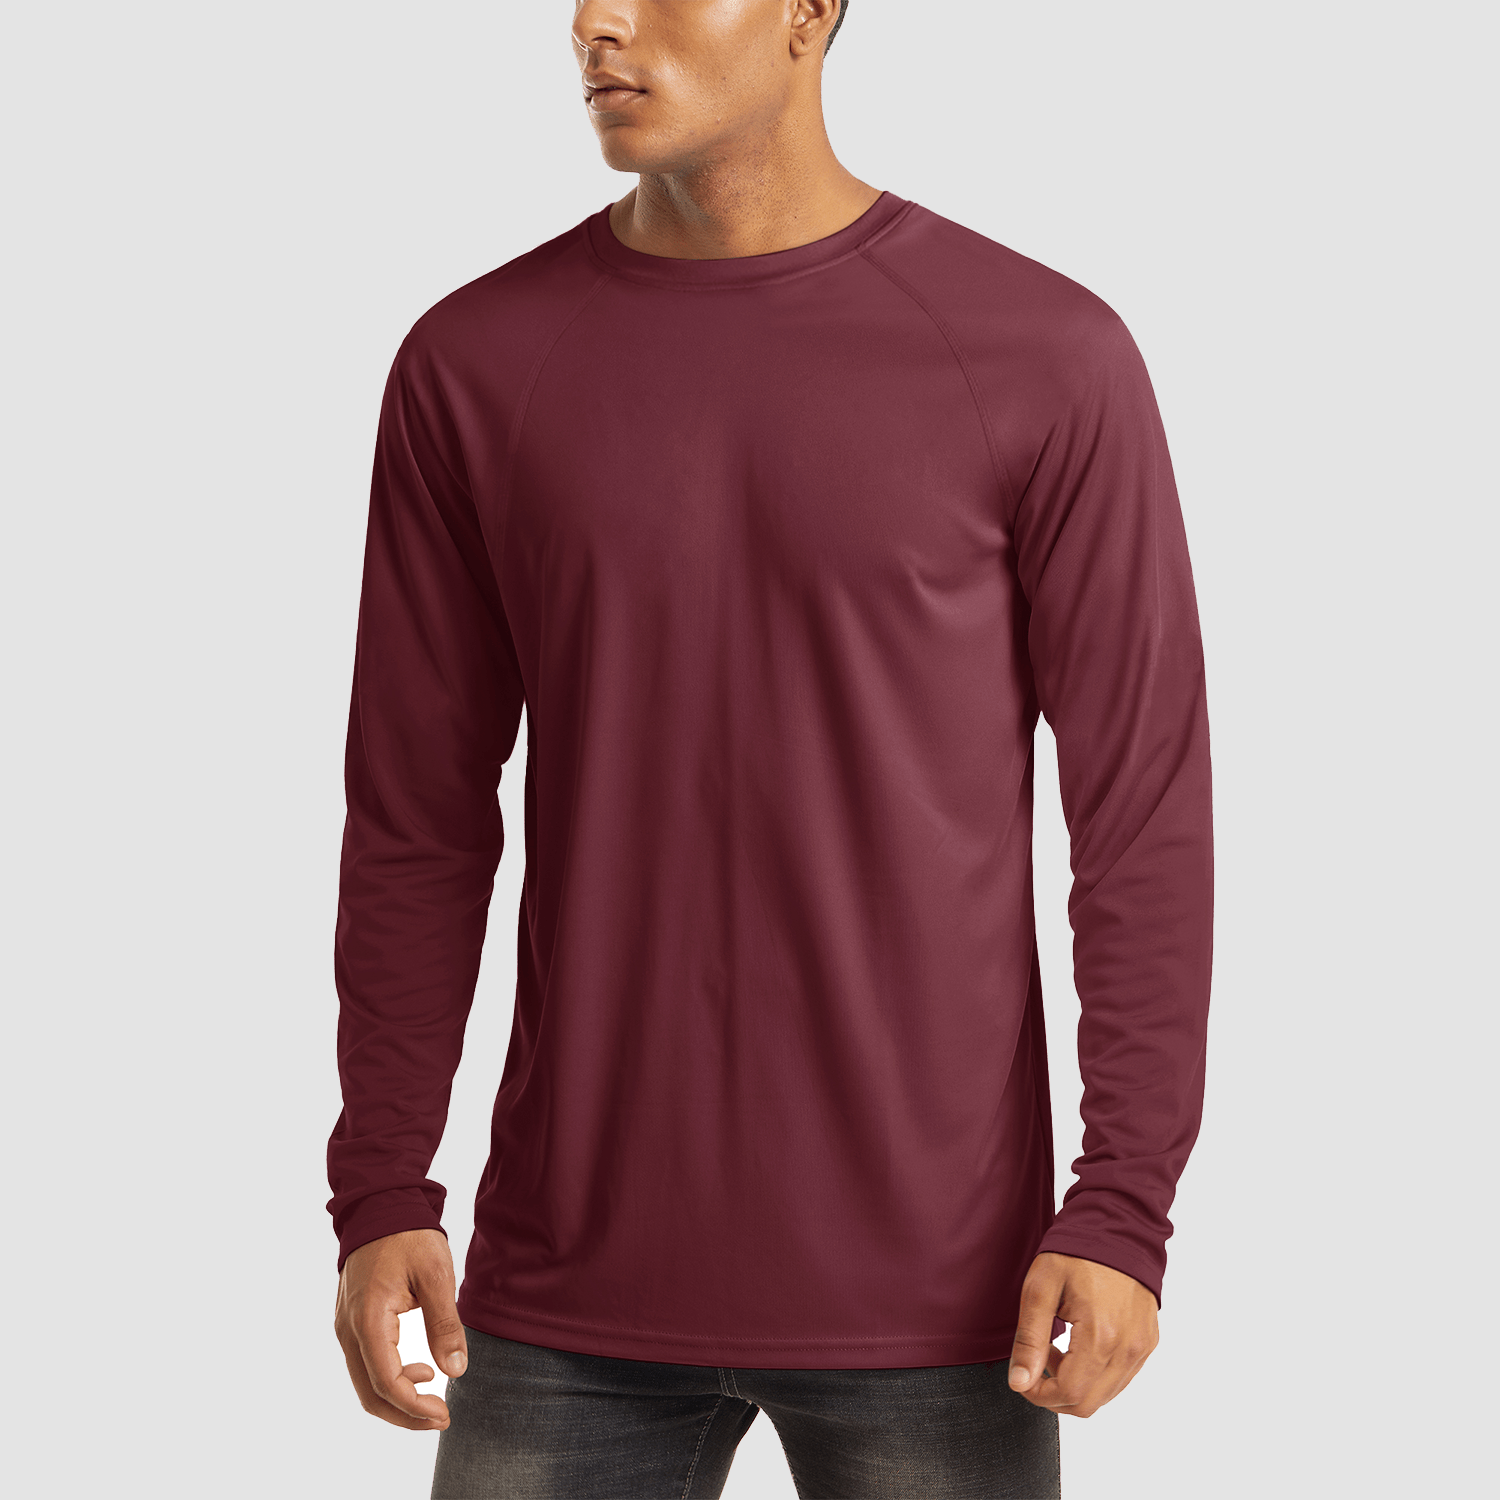 【Buy 4 Get 4th Free】Men's Long Sleeve Hooded Shirt UPF 50+ Athletic Shirt